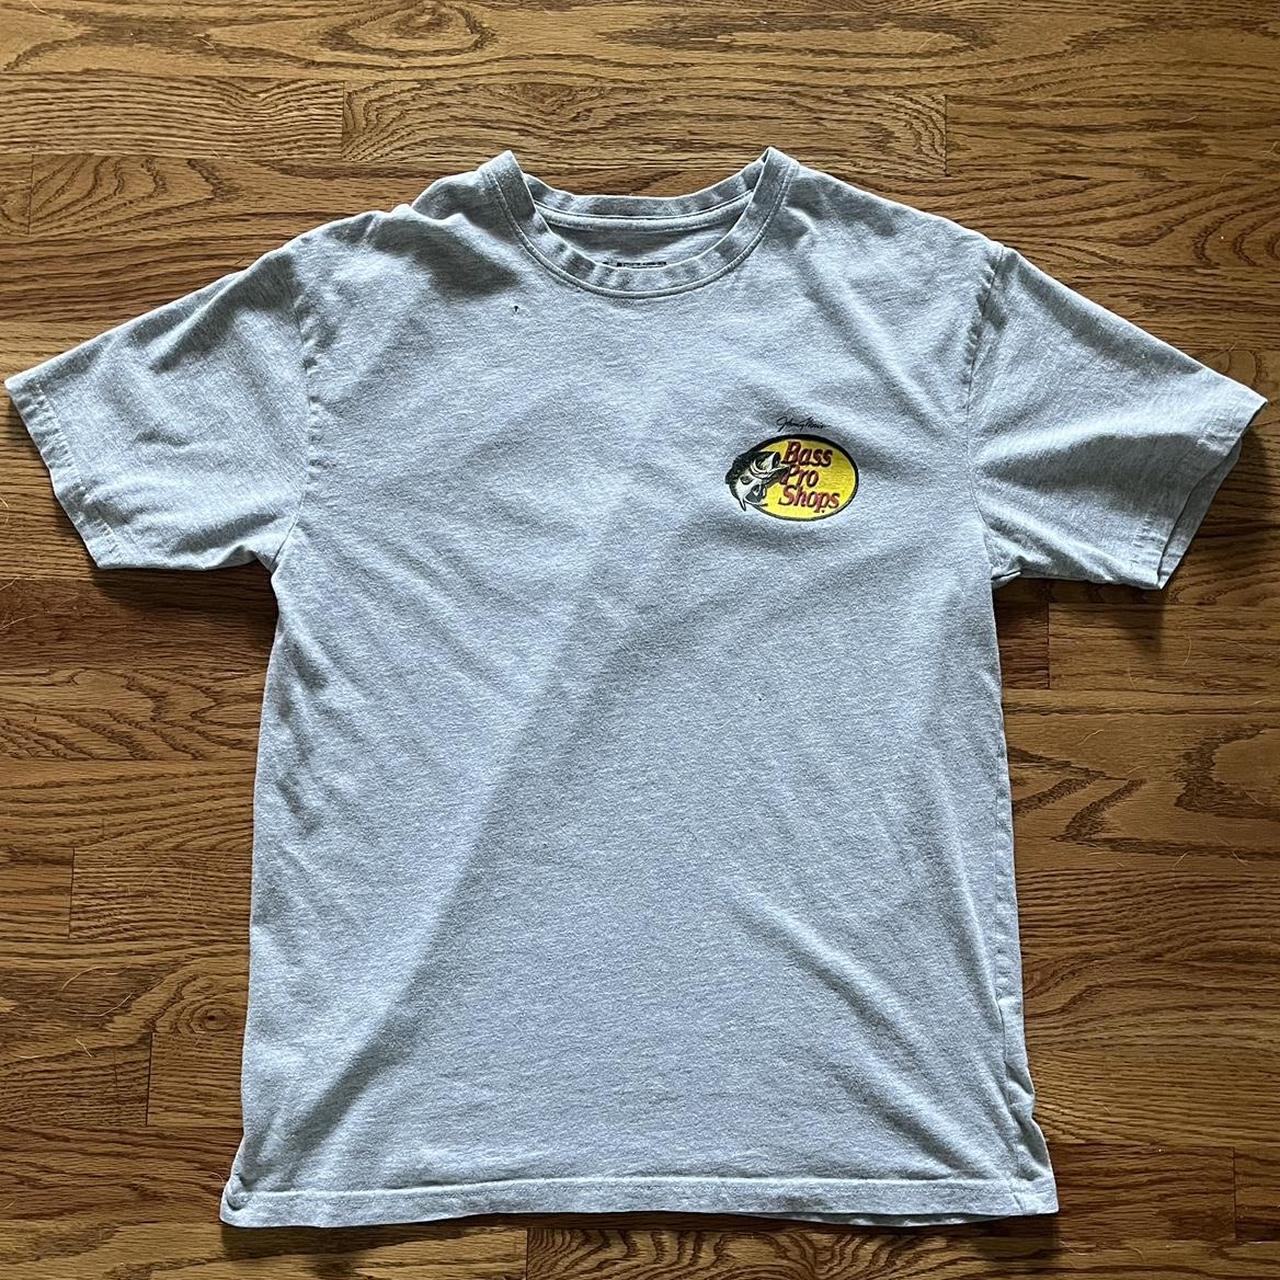 Bass Pro Shops TGIF Short-Sleeve T-Shirt for Men -Heather Gray